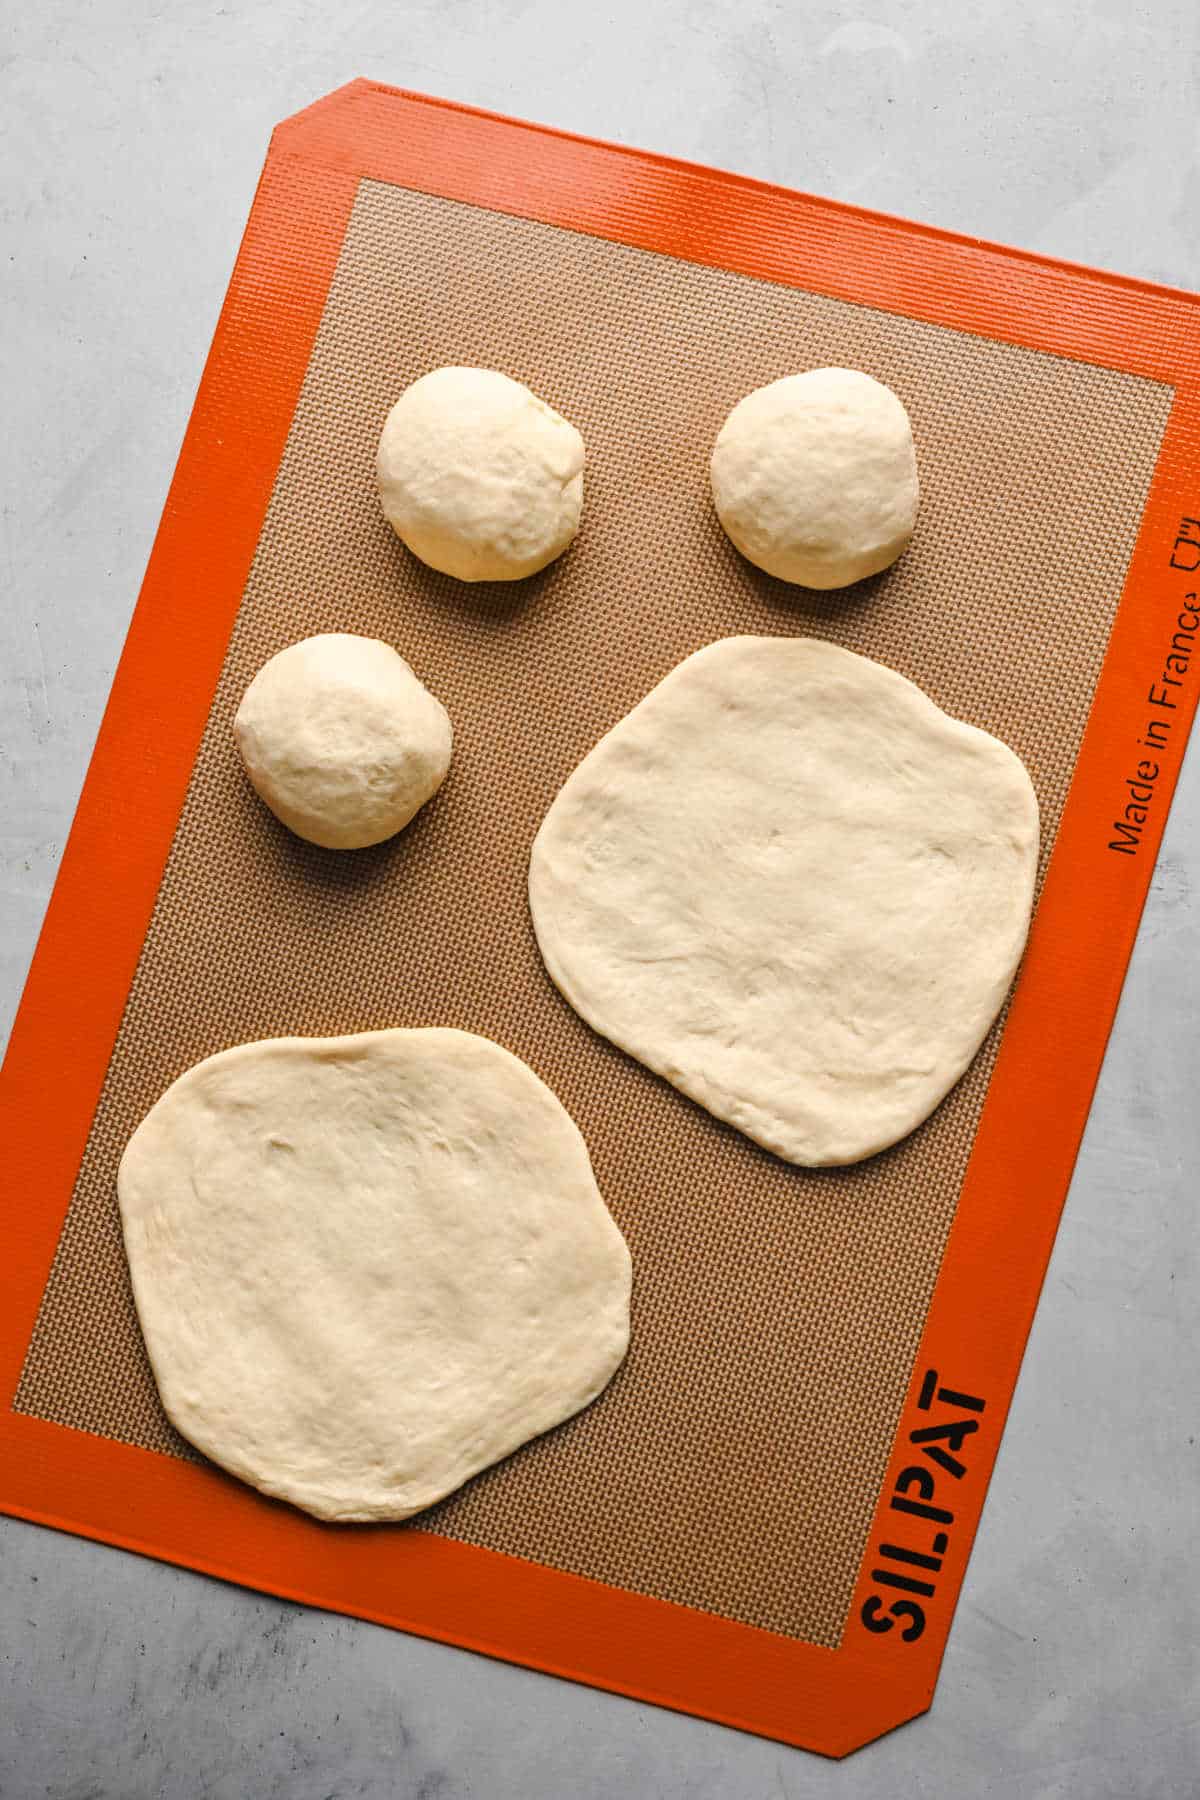 Balls of flatbread dough flattened into a circle. 